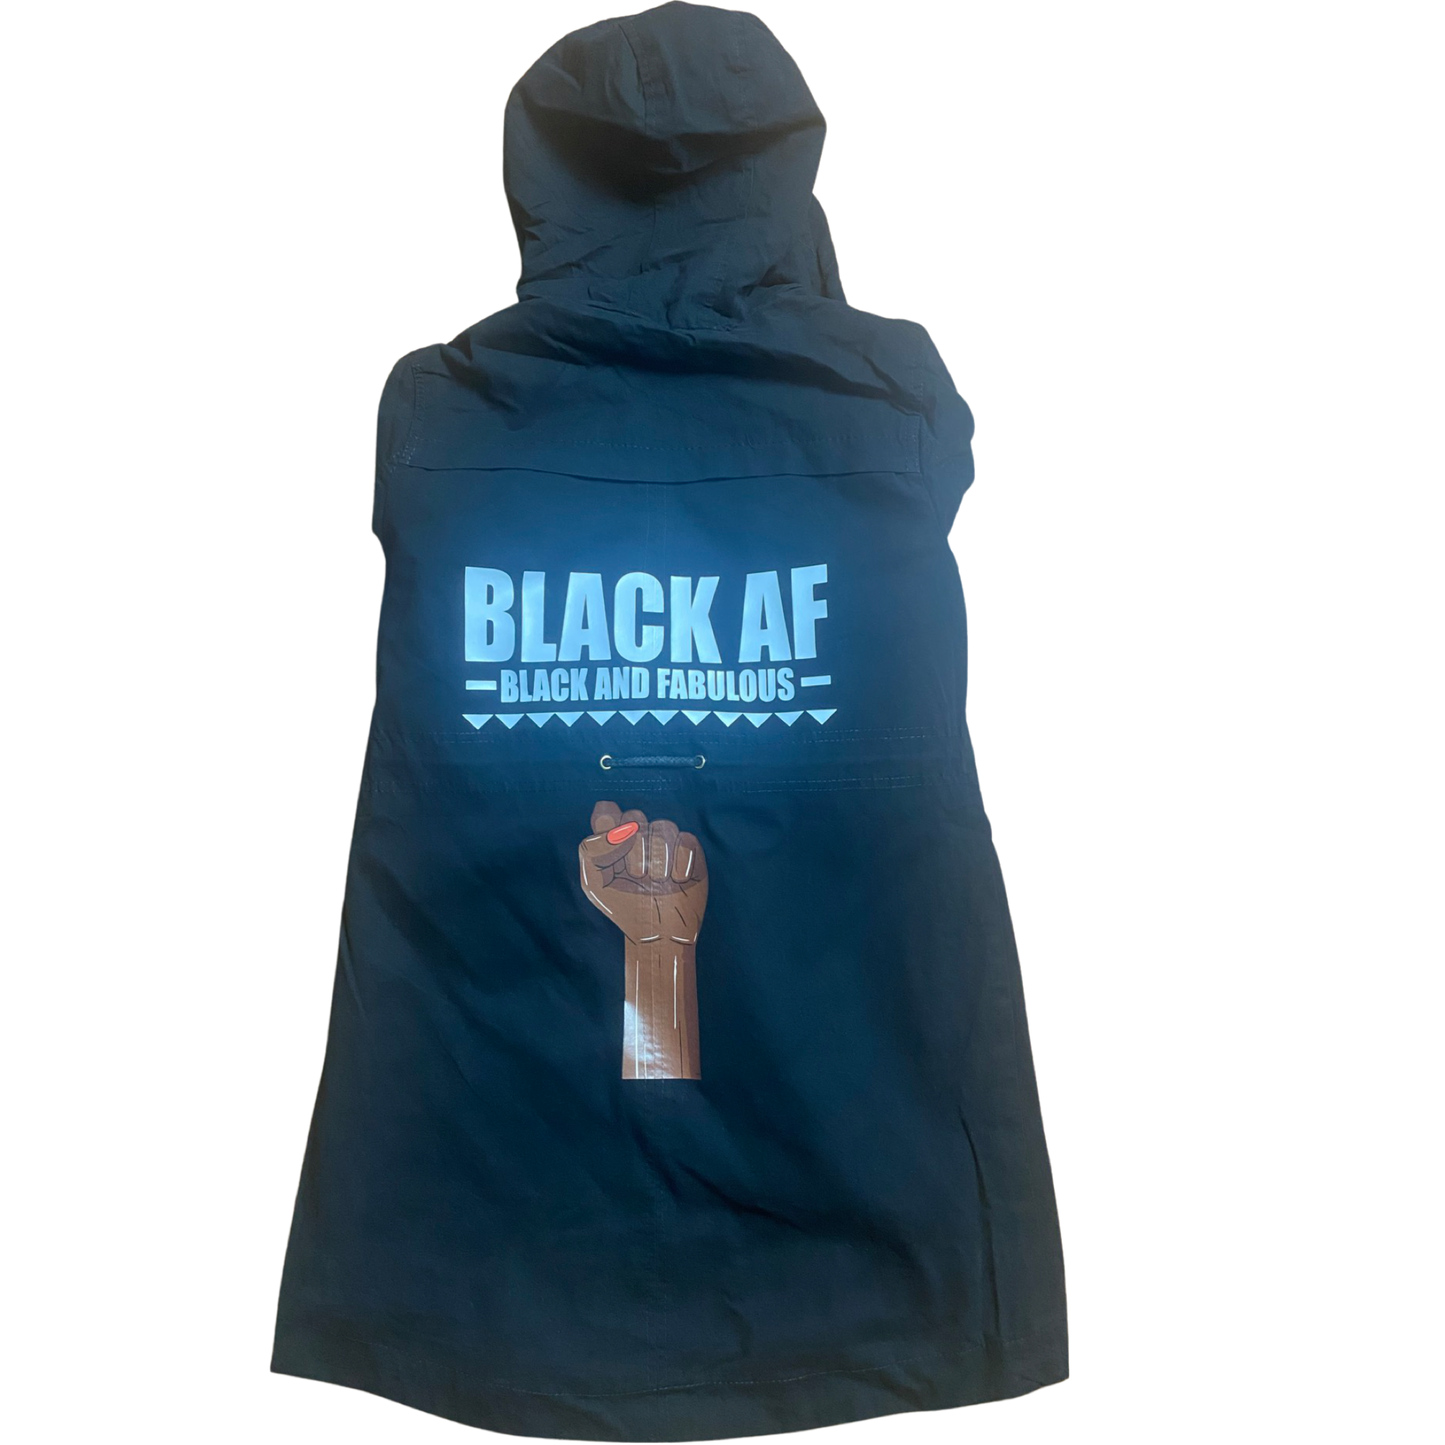 BLACK AF Black and Fabulous Womens Jacket